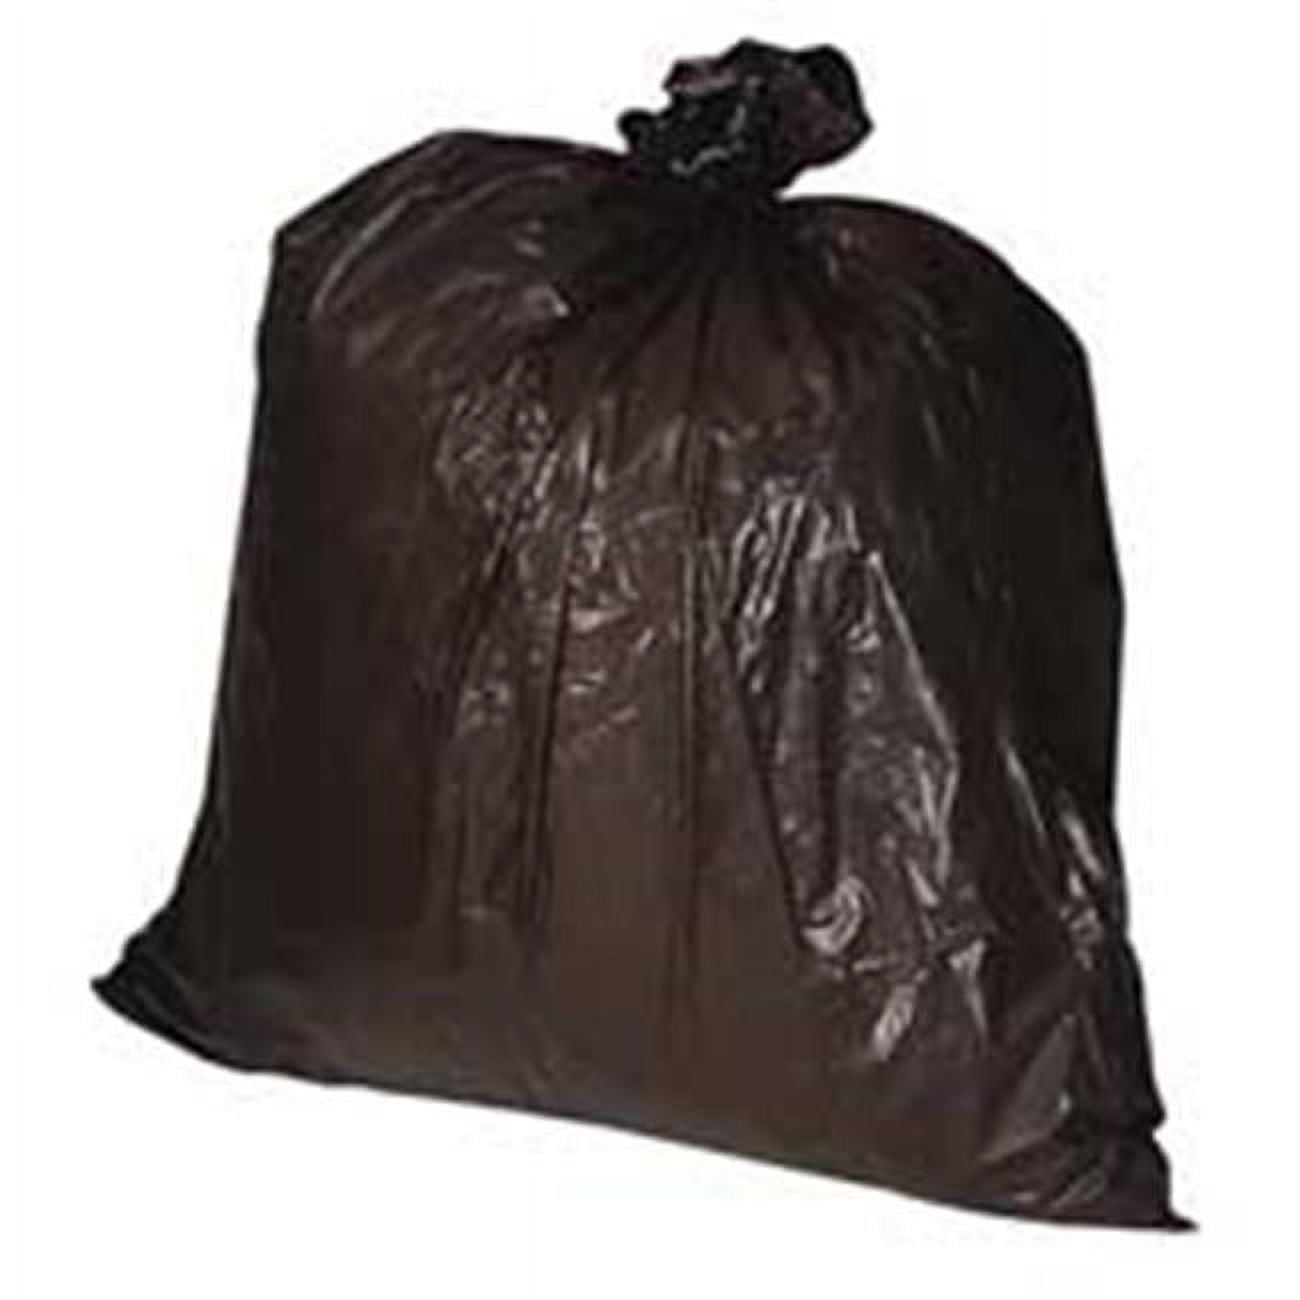 Global Industrial Heavy Duty Black Trash Bags - 65-70 Gallon, 1.7 mil, 100 Bags/Case